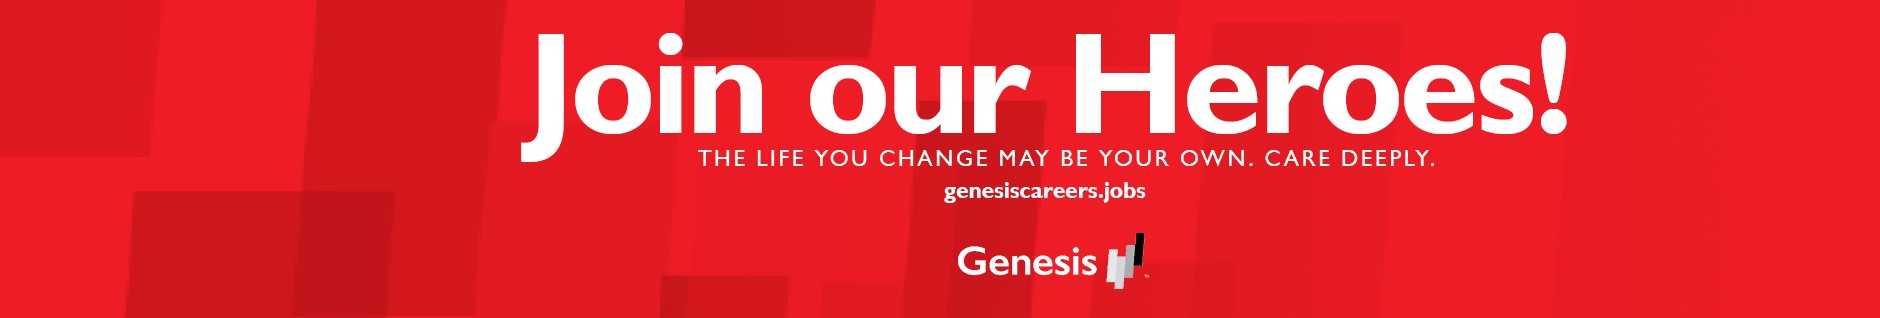 Genesis life care